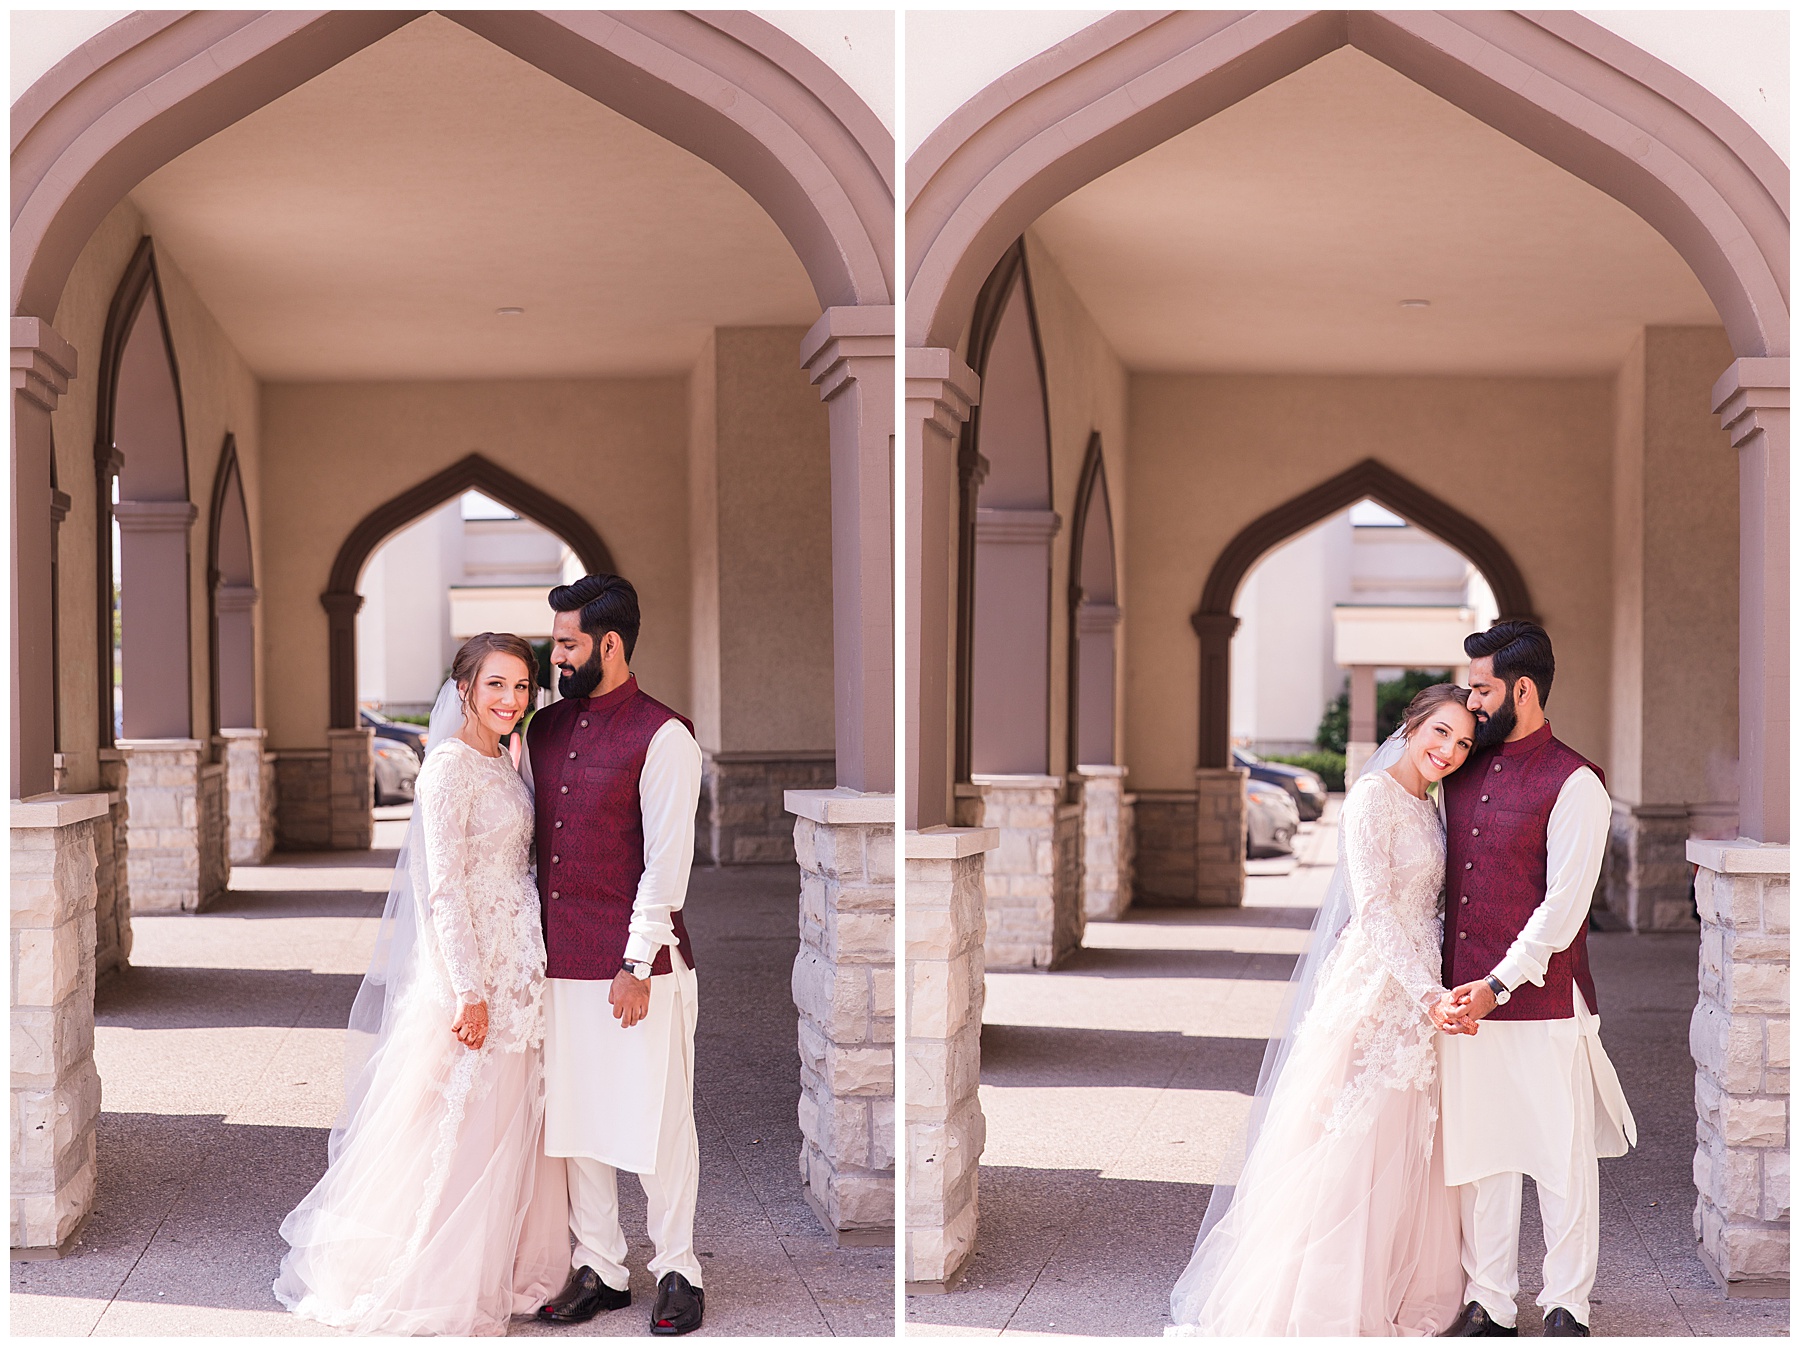 ISNA CANADA, Riverwood Park, Mint Room Studios wedding photos, Pakistani wedding photography Toronto, Shirley Wu, Nilo Haq